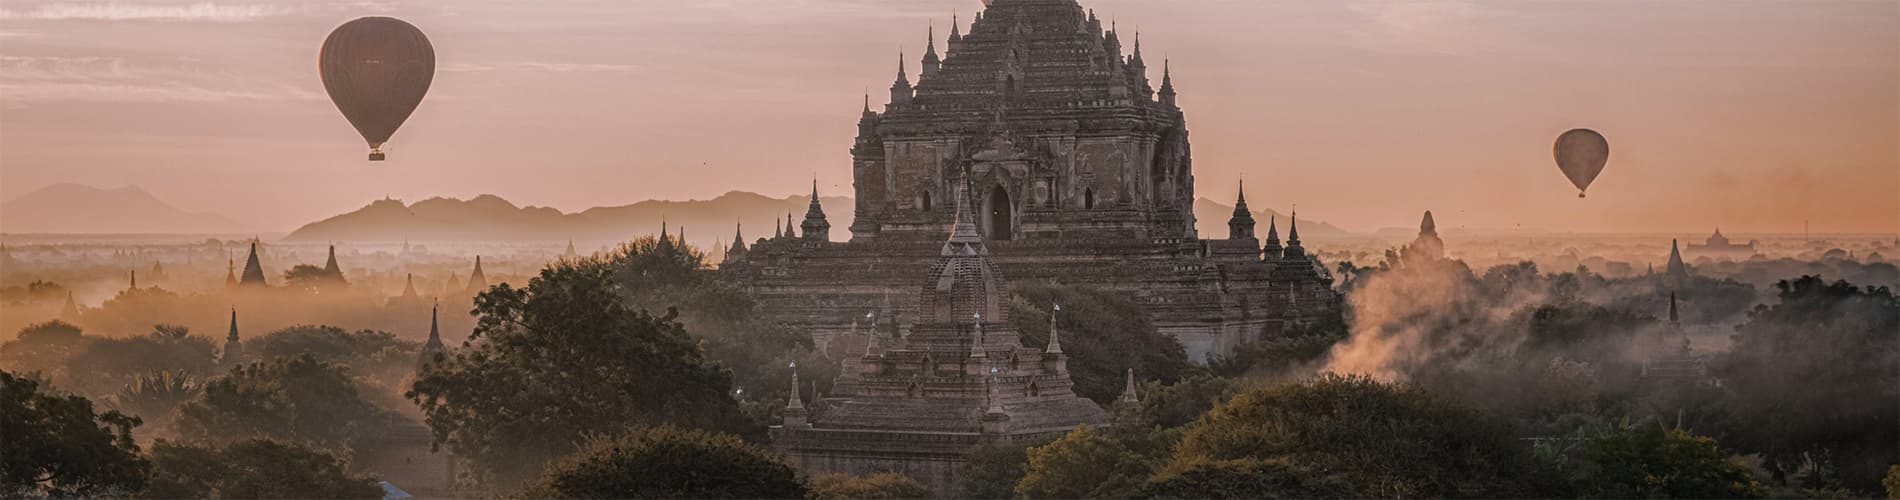 Du lịch Myanma